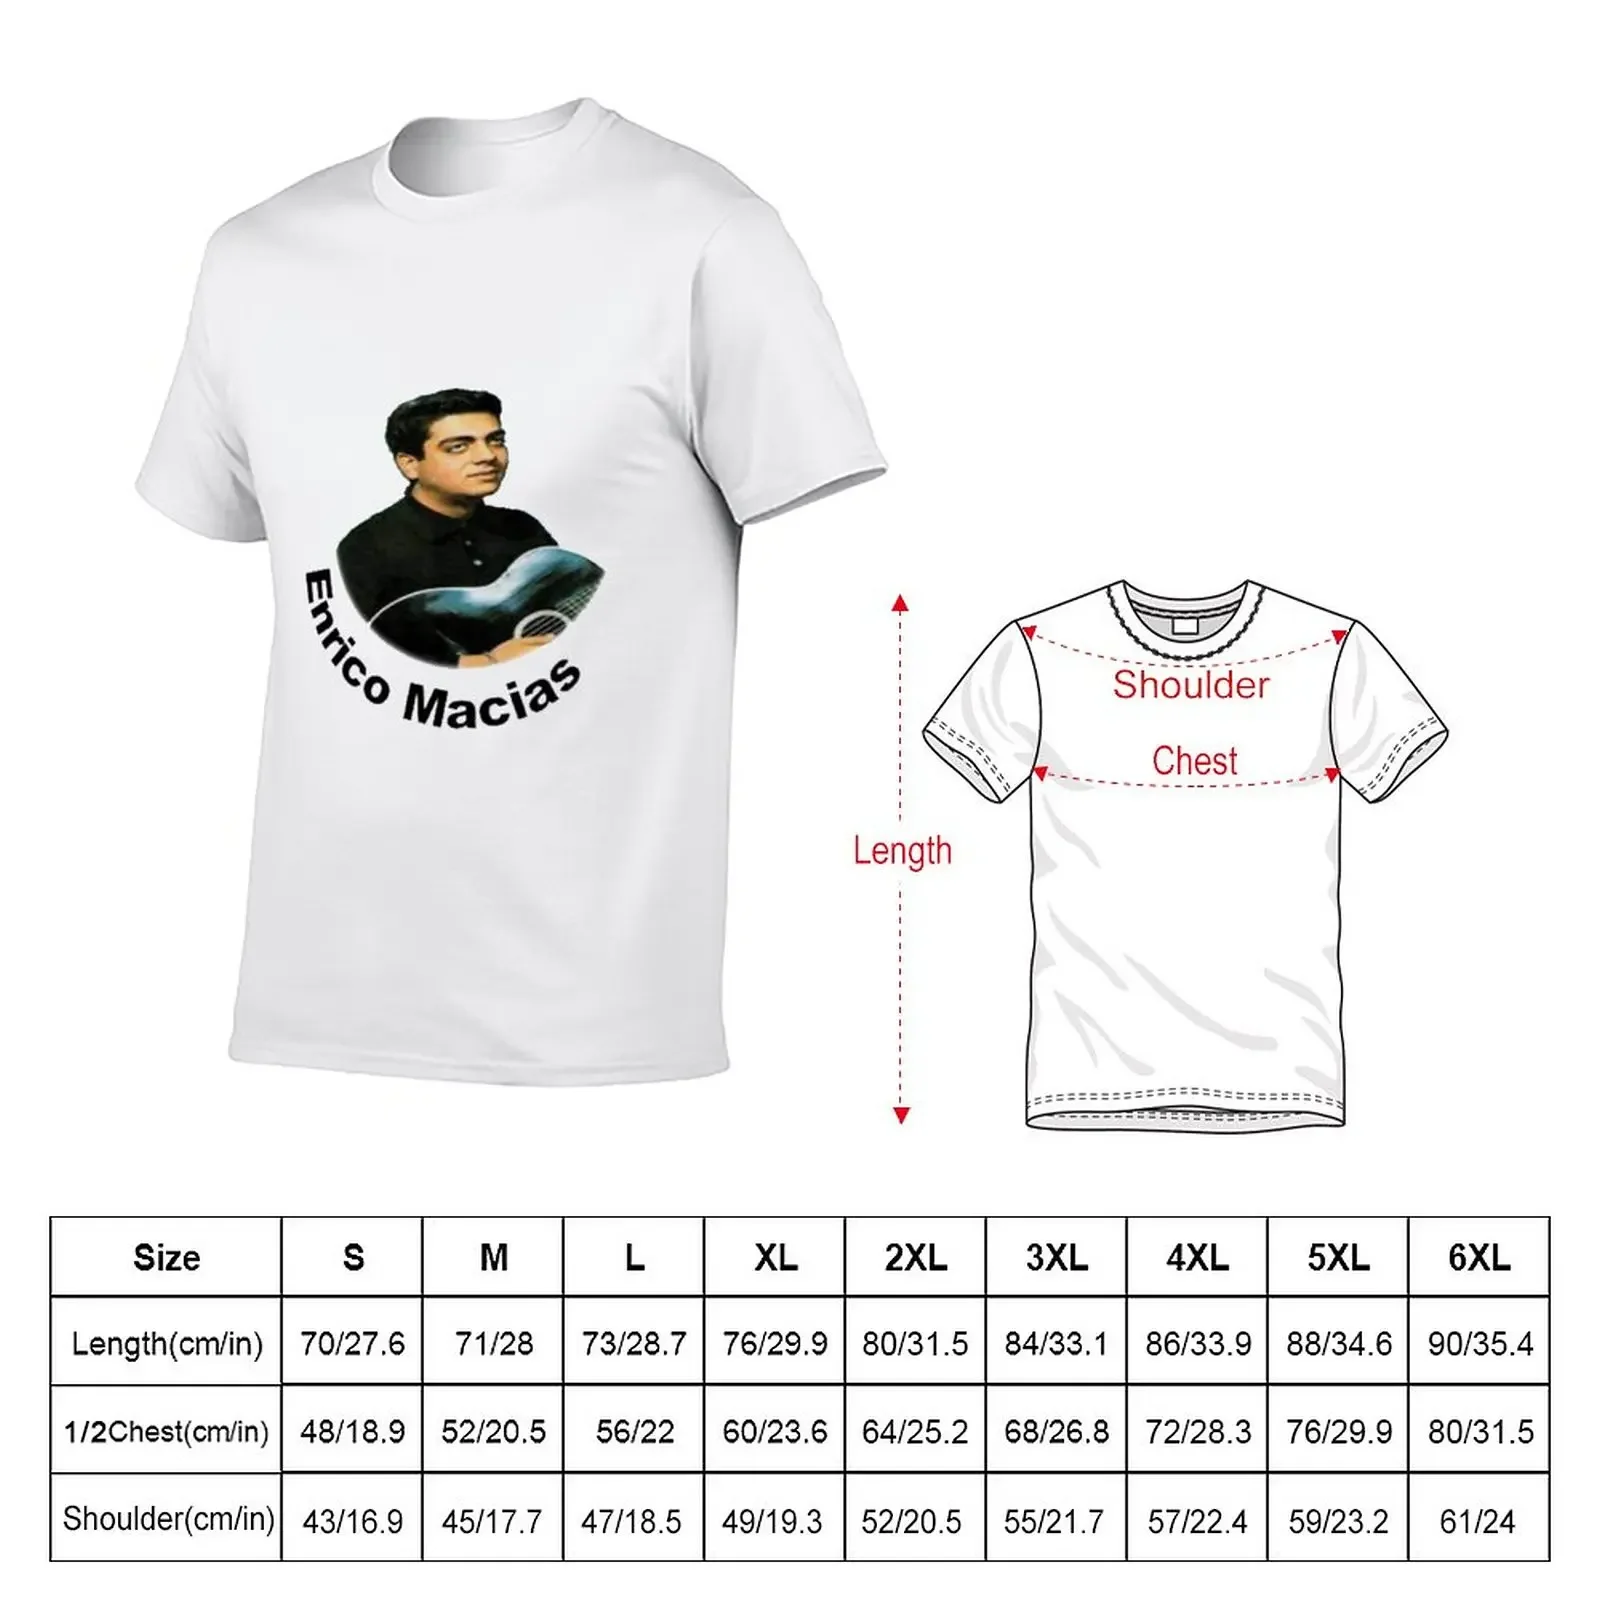 Camiseta de Enrico Macias para hombre, Camisa de algodón con estampado de cantante francés, tops bonitos de anime